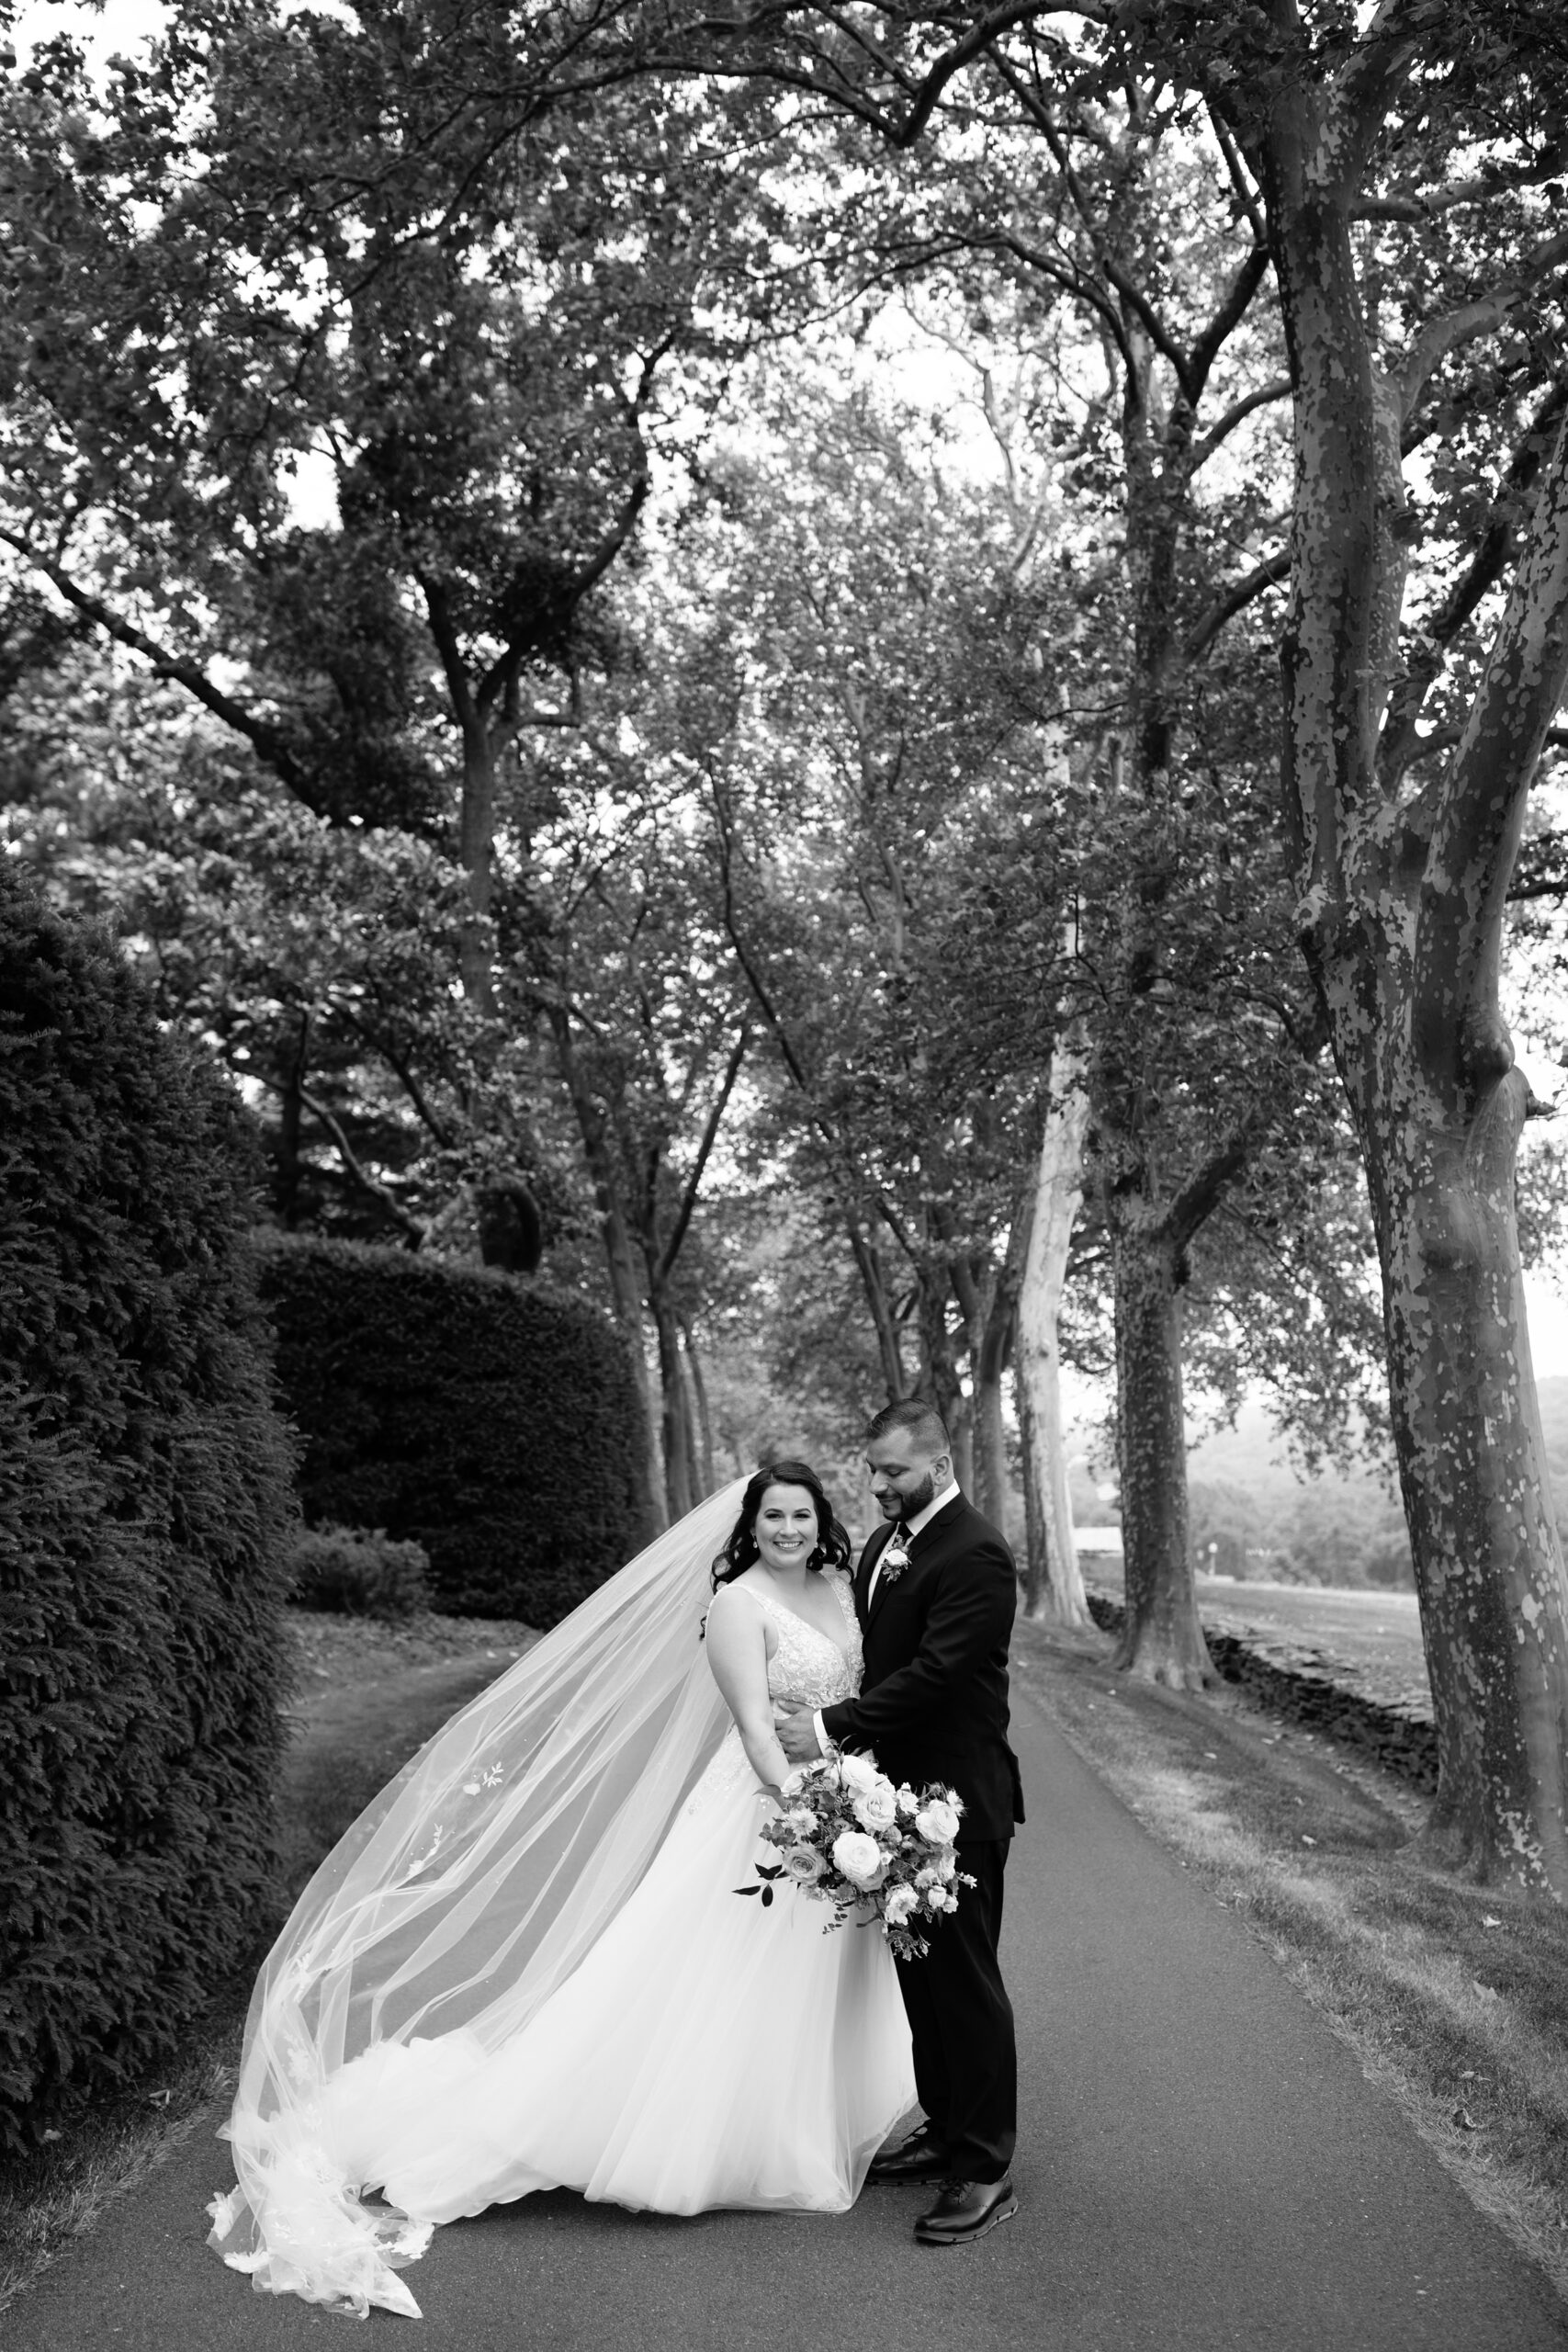 Drumore Estate Wedding, Romantic Gardens Estate Wedding in Central Pennsylvania, captured by Lancaster's Luxury Wedding Photographers Janae Rose Photography